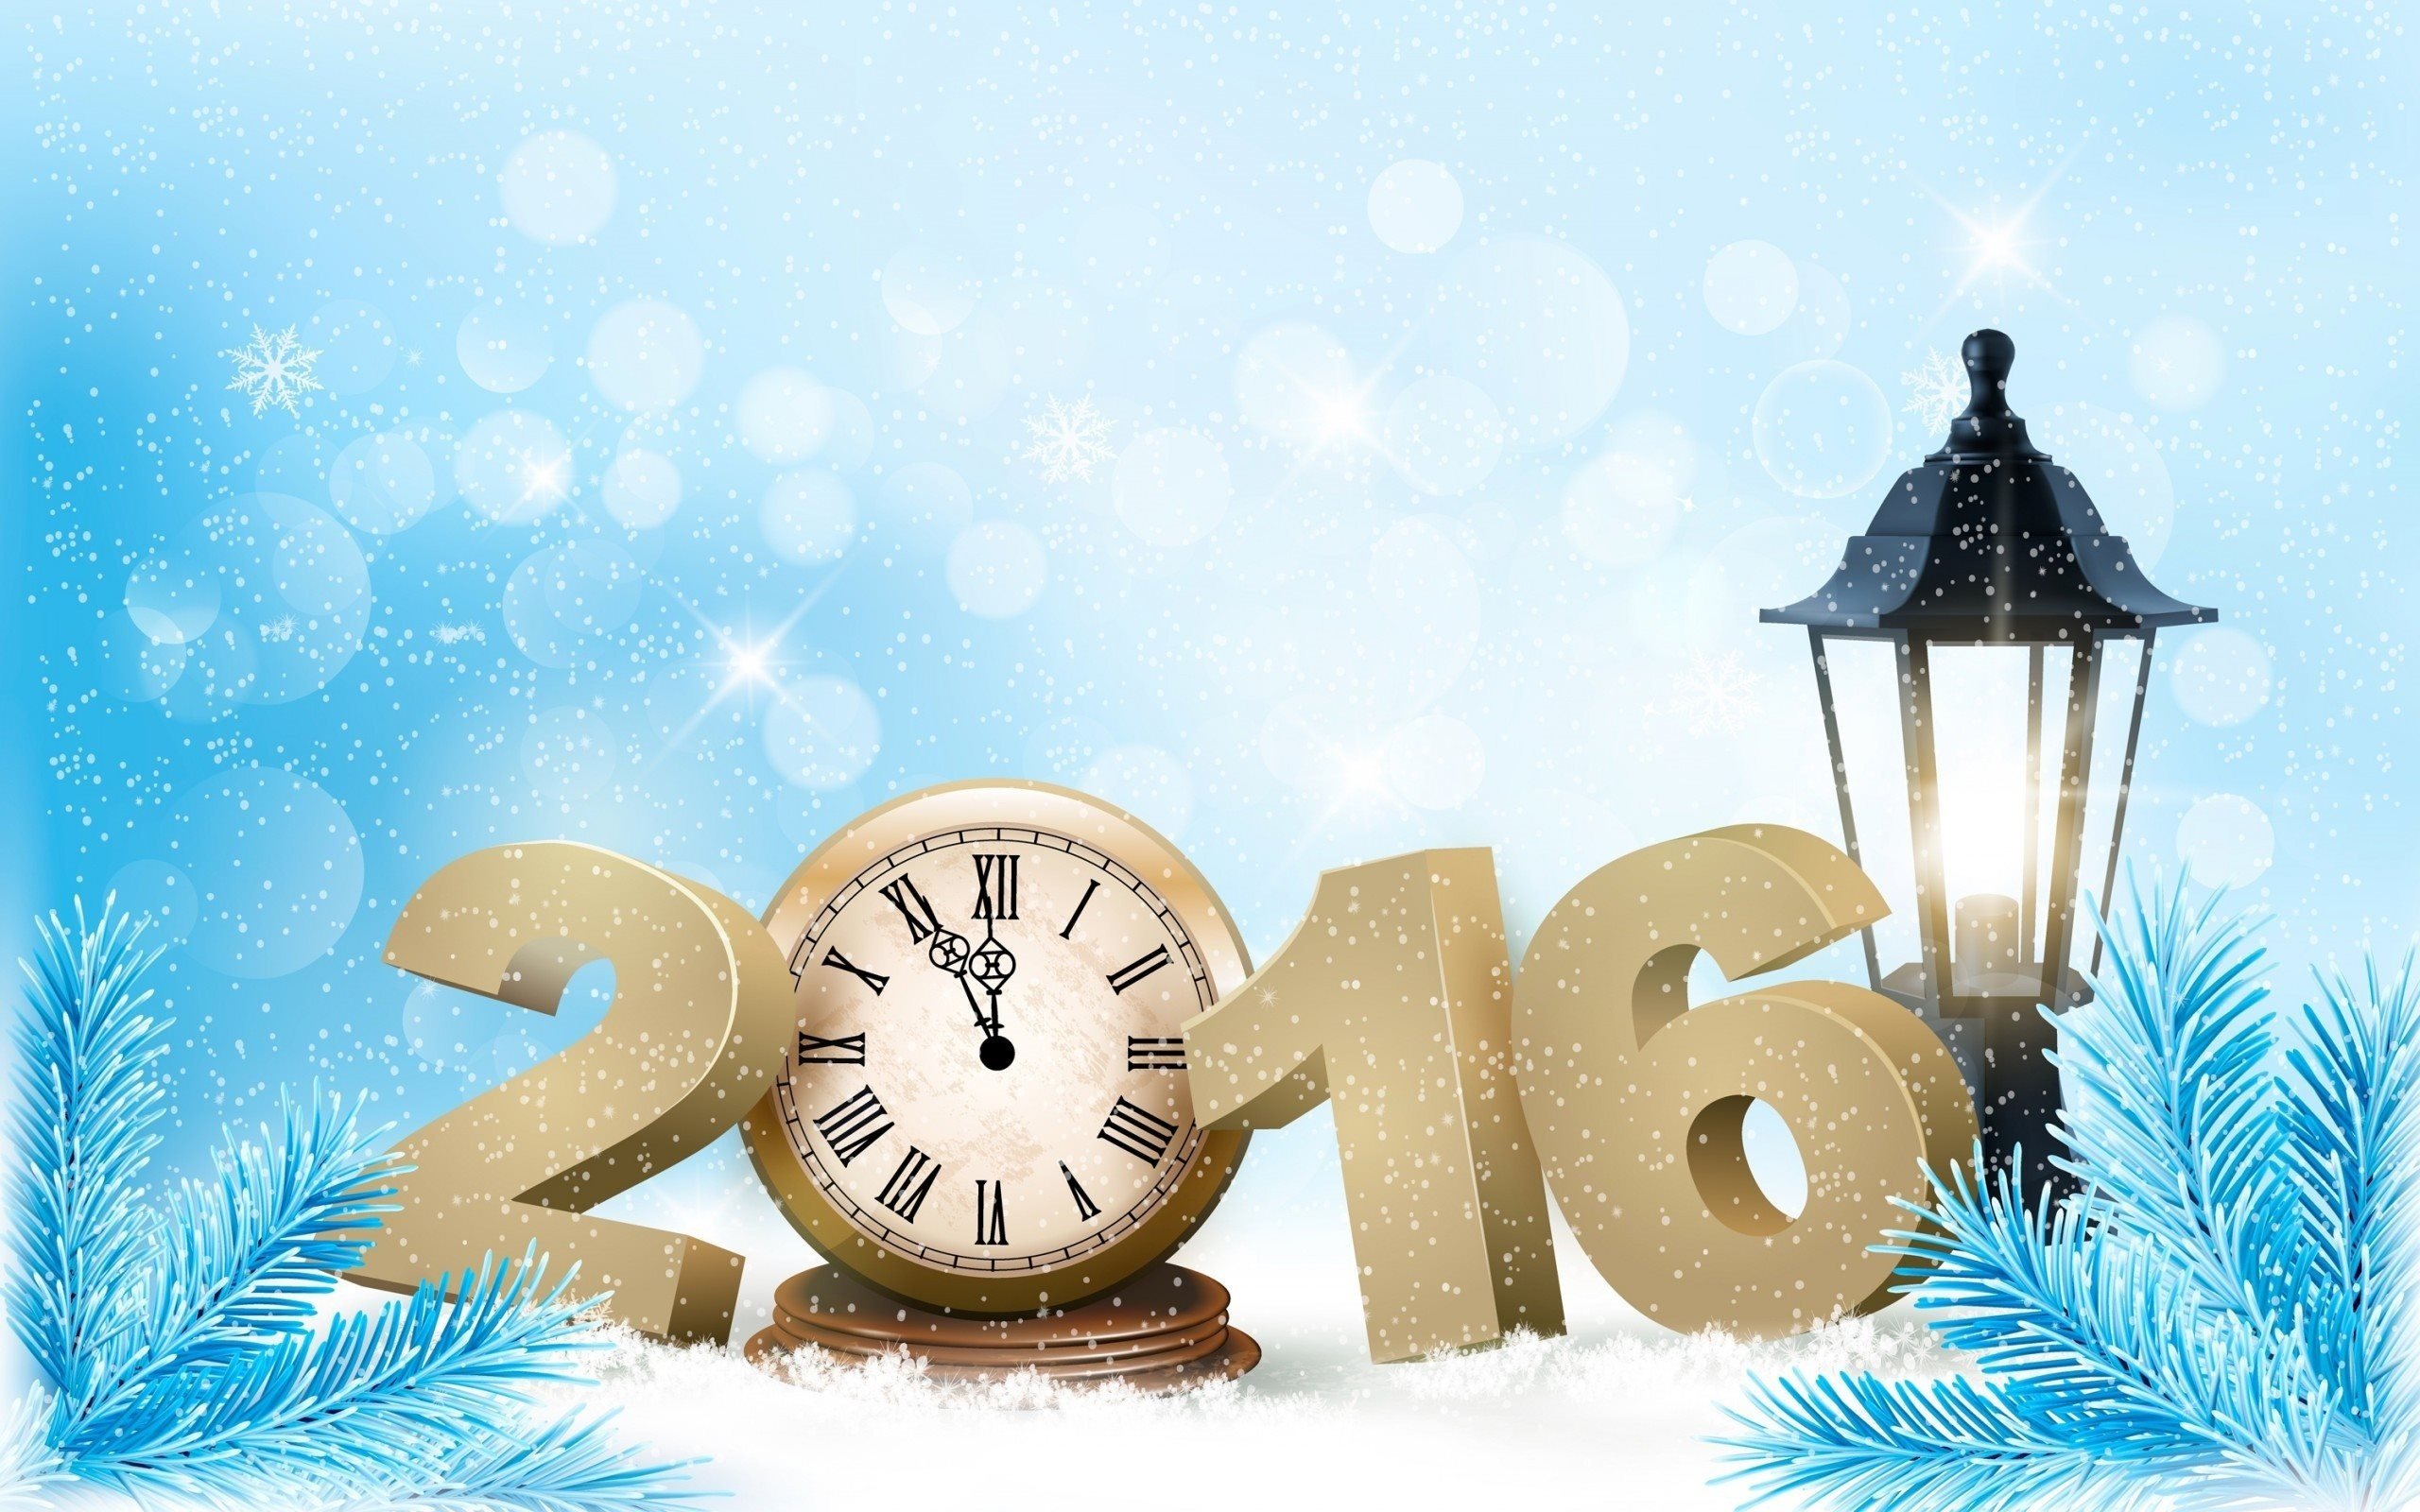 2016, New, Year, Holiday, Seasonal, Christmas Wallpaper